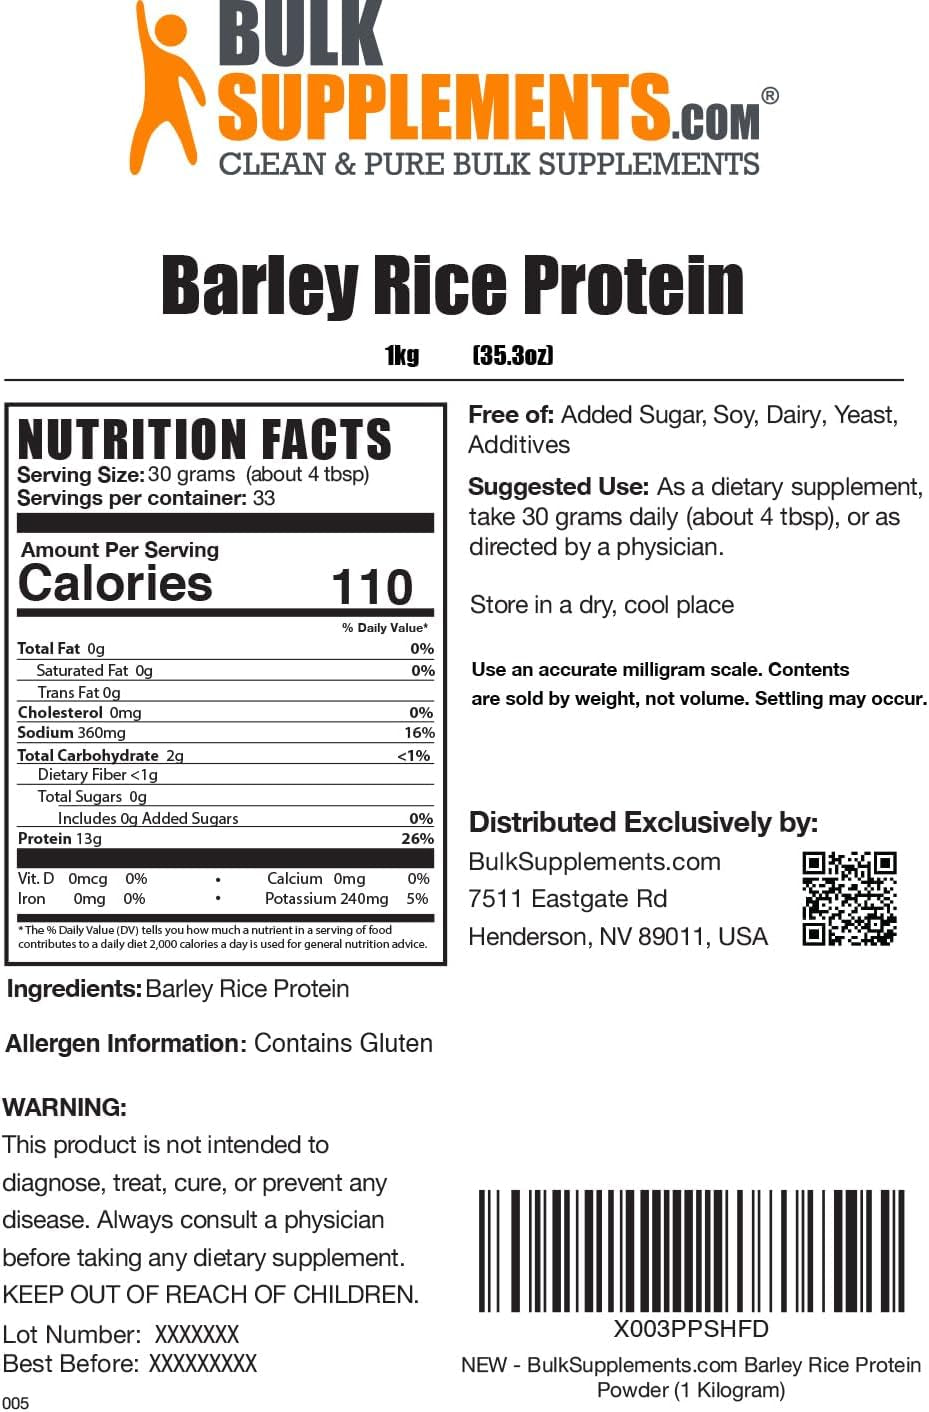 BULKSUPPLEMENTS.COM Barley Rice Protein Powder - 1 Kilogram